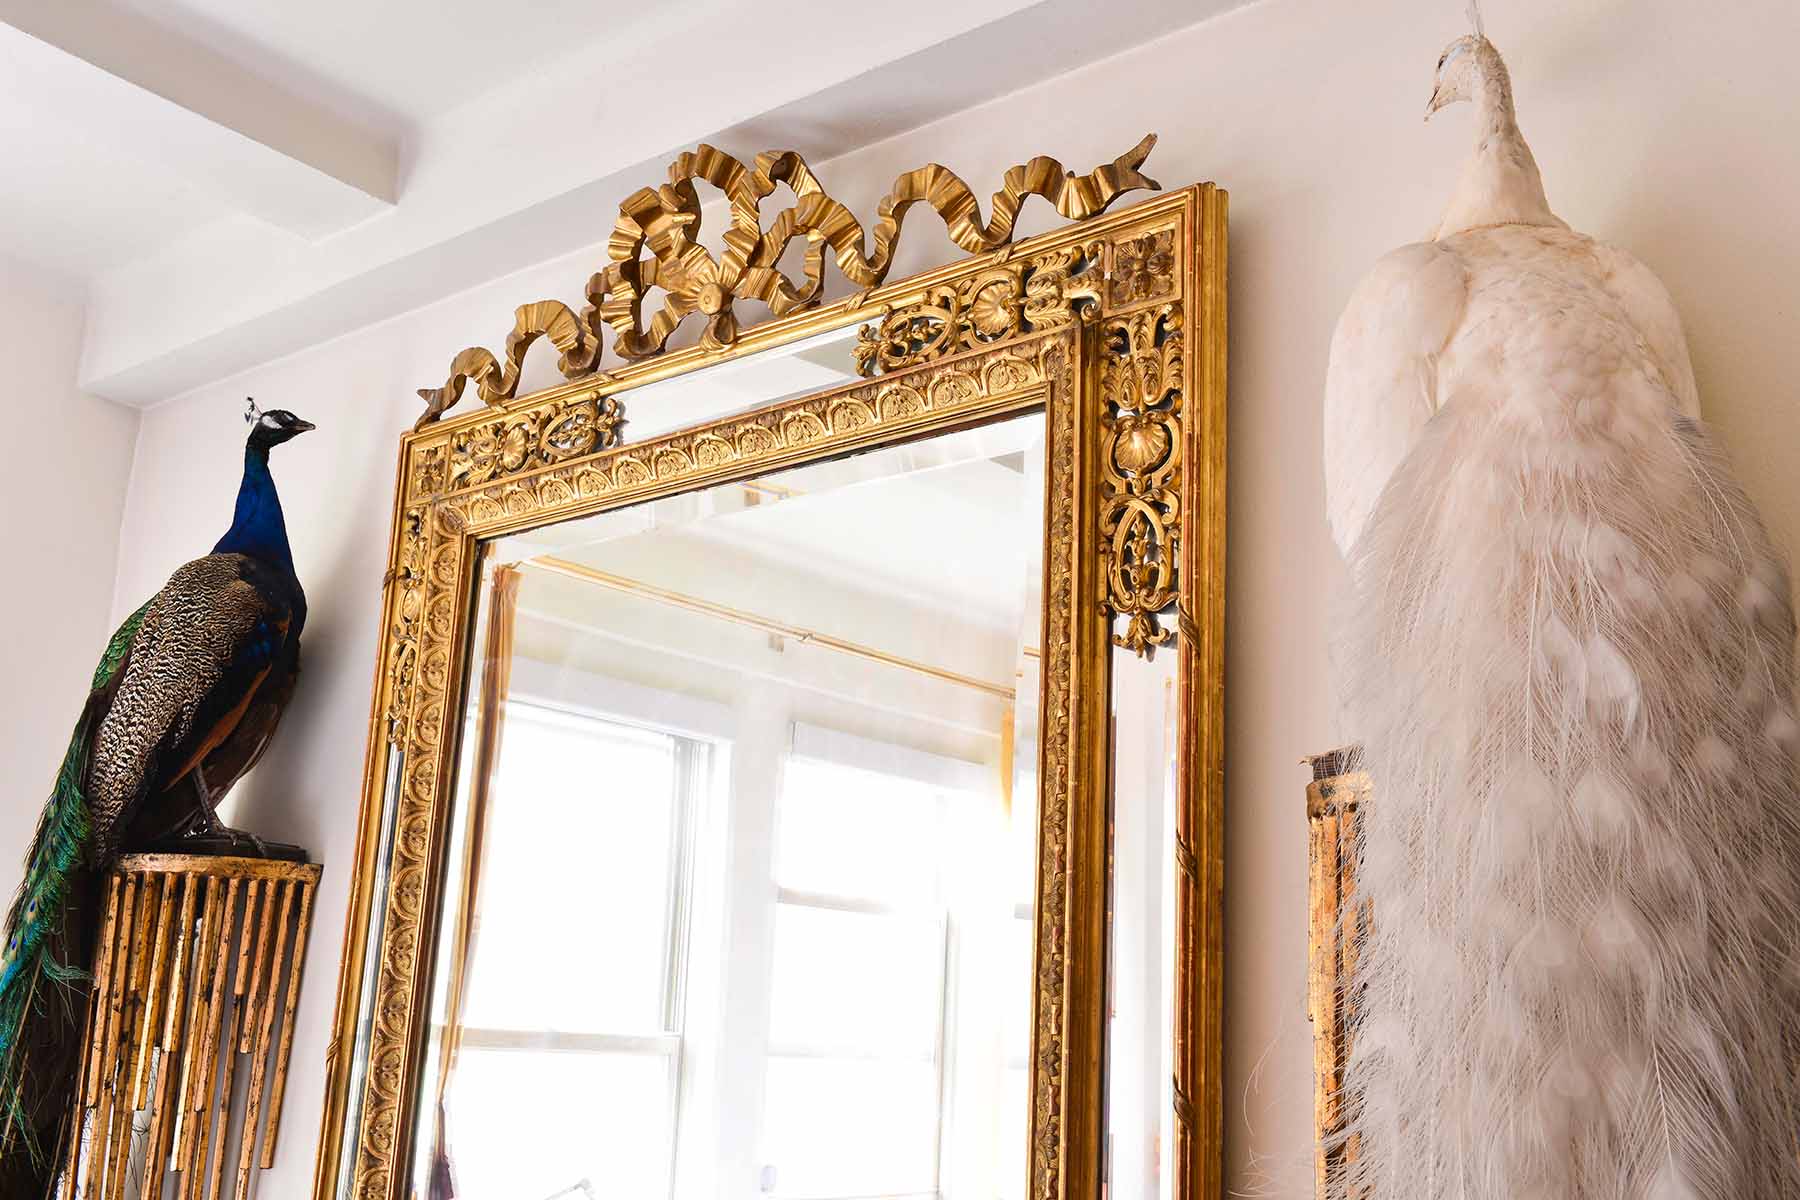 Stuffed peacocks next to gilded mirror